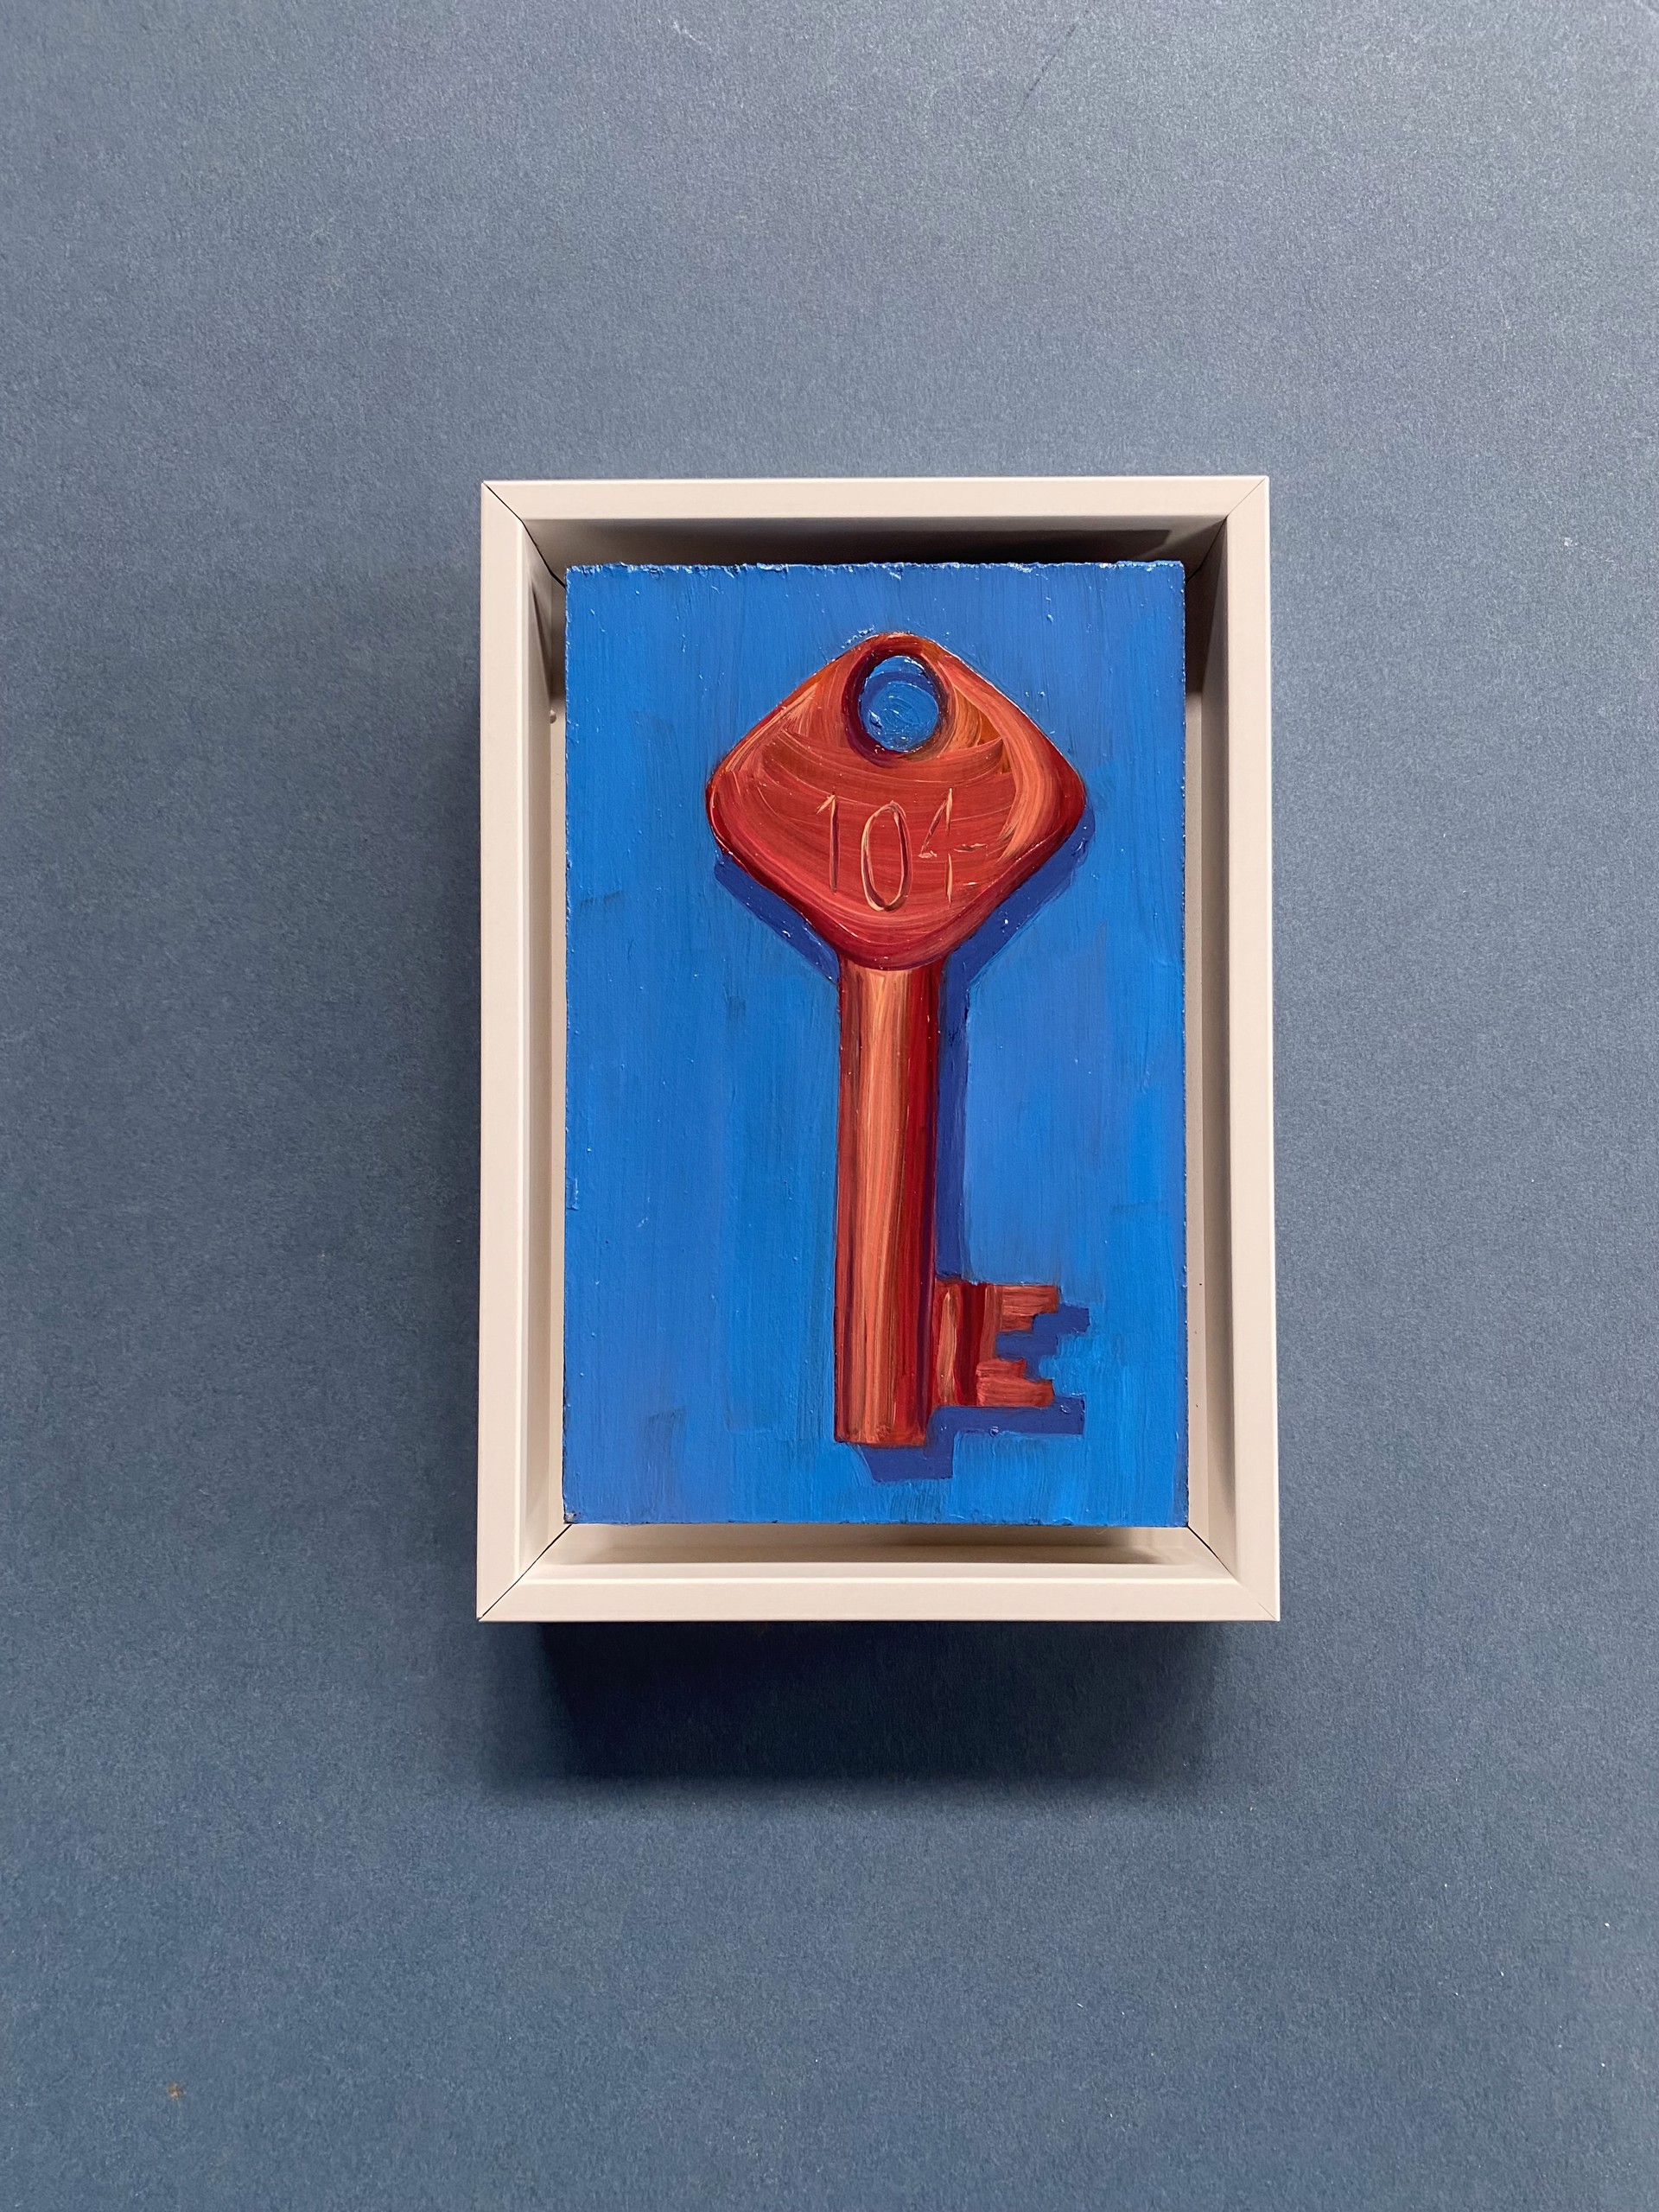 Key No. 43 by Stephen Wells